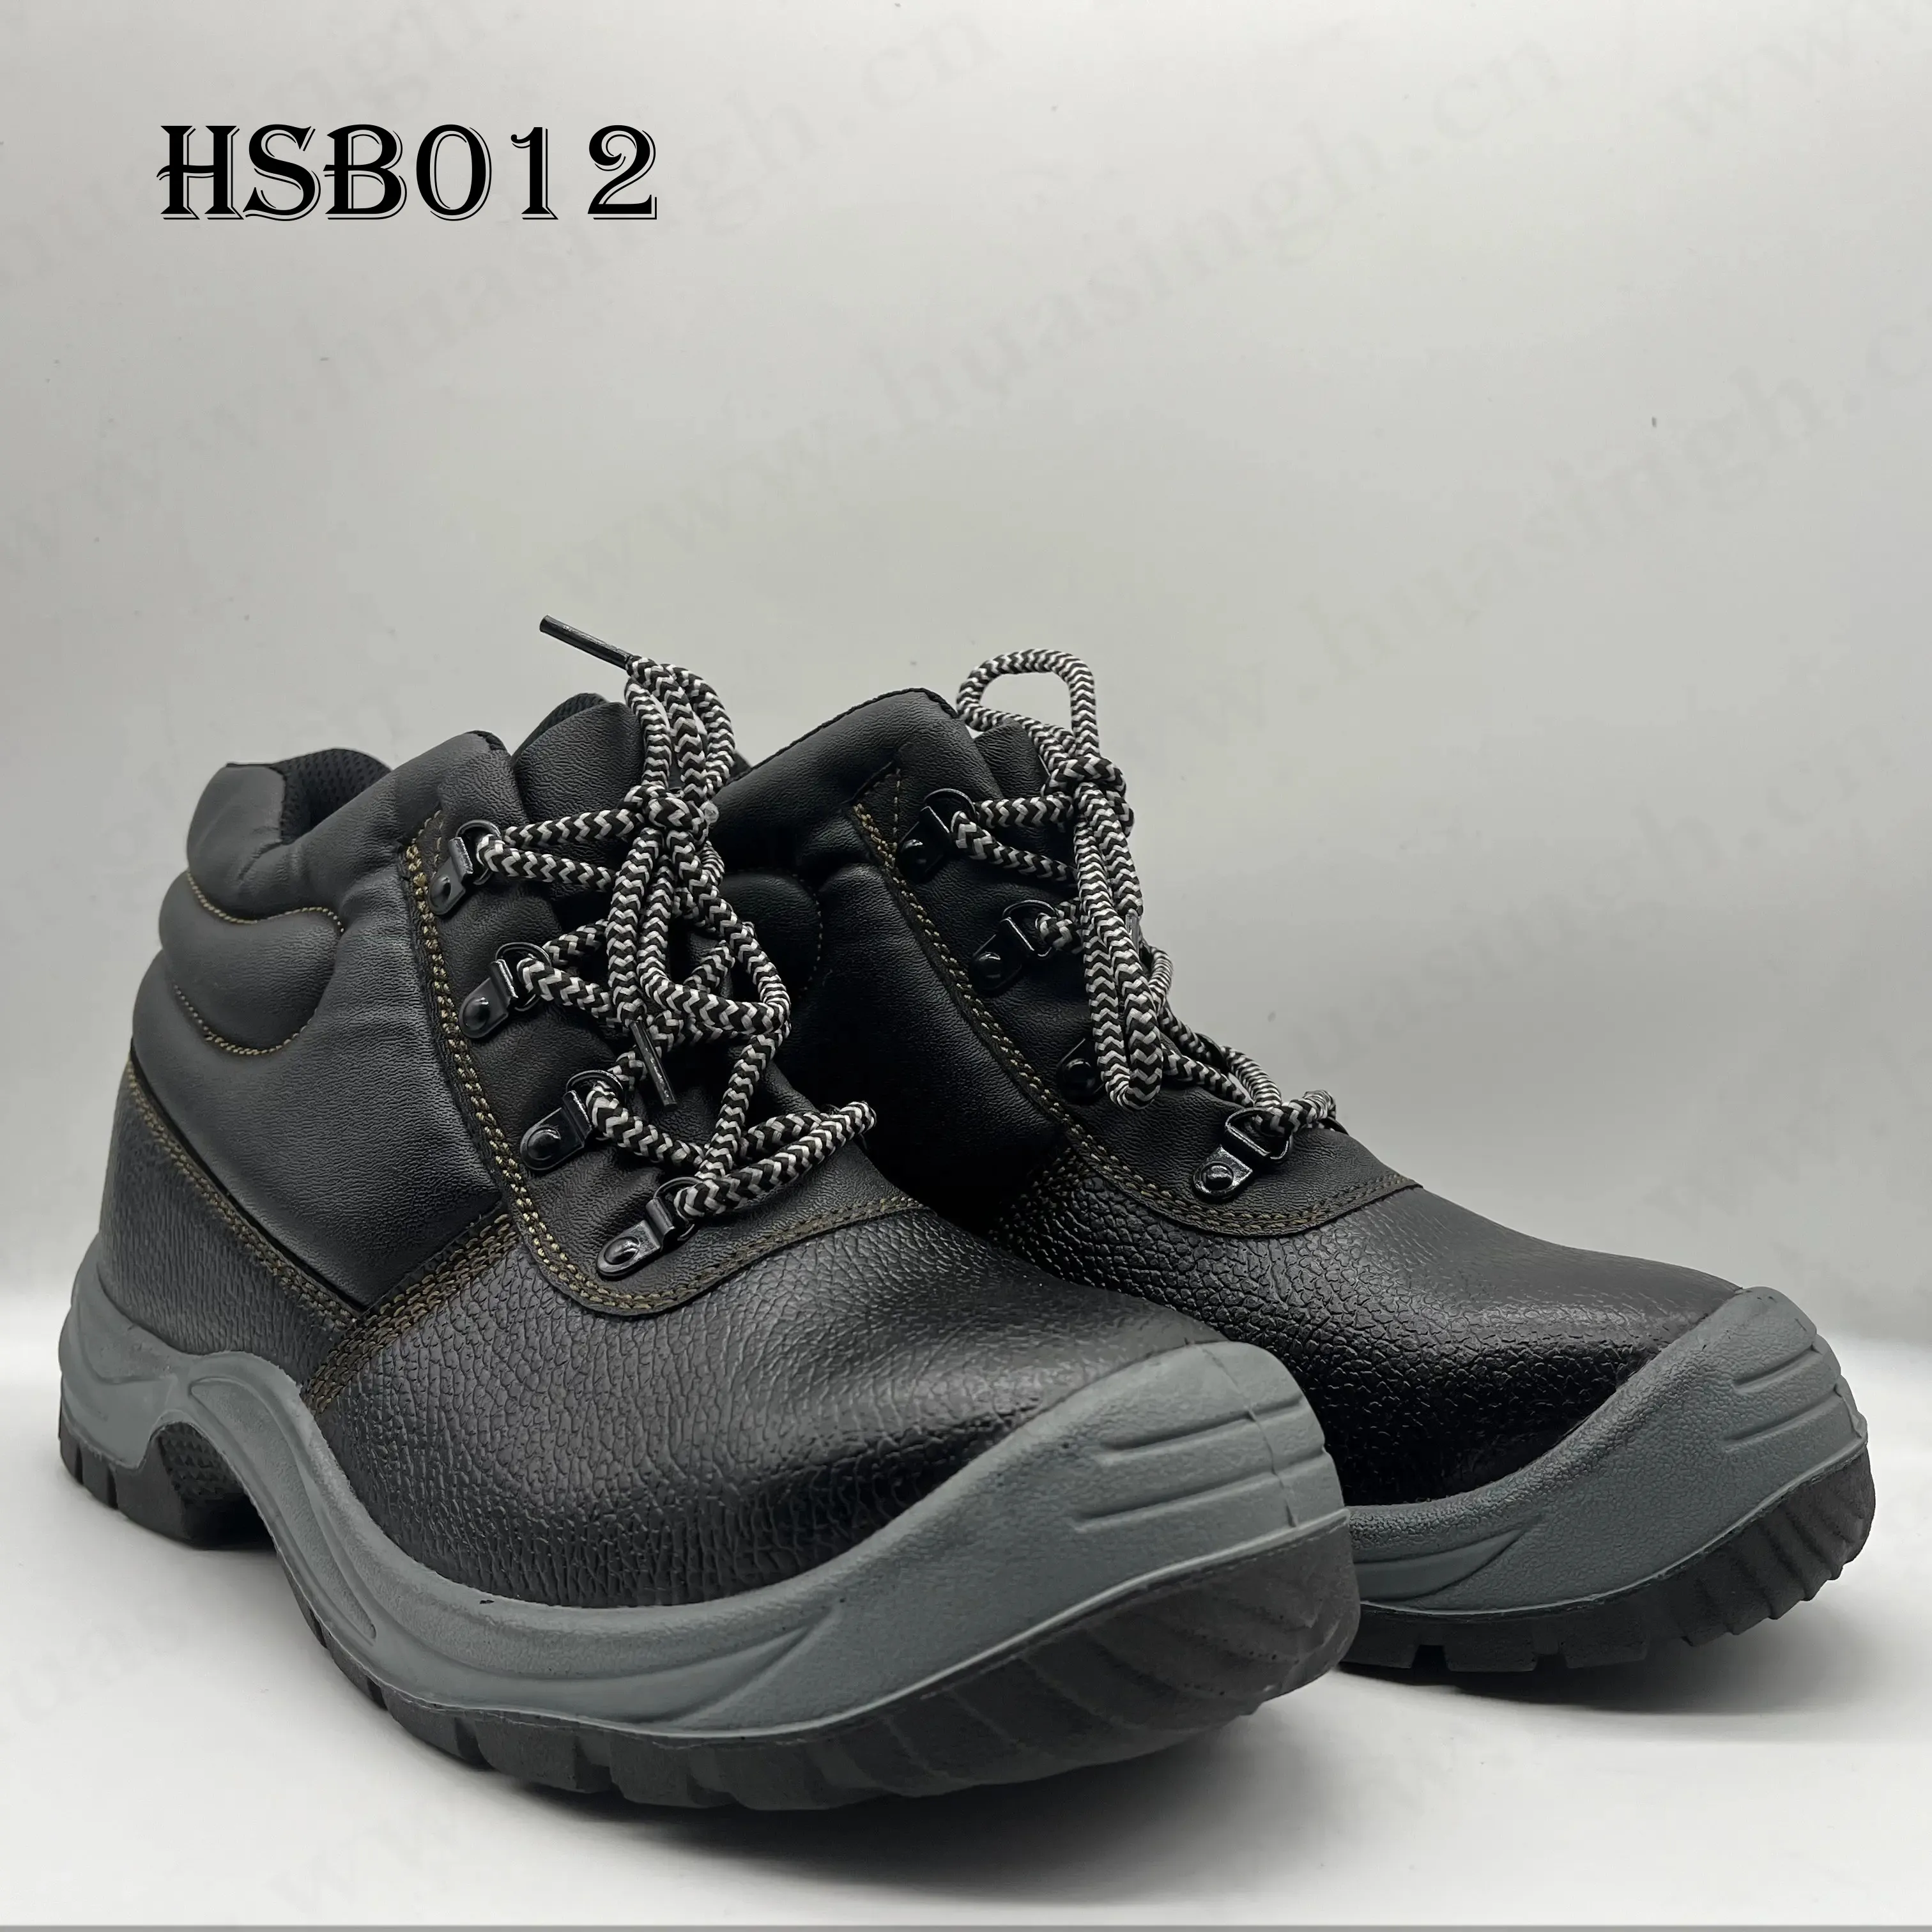 YWQ,Qatar market, популярная прочная защитная обувь среднего размера из полиуретана/полиуретана для инъекций, одобренная прочная обувь для страхования труда HSB012